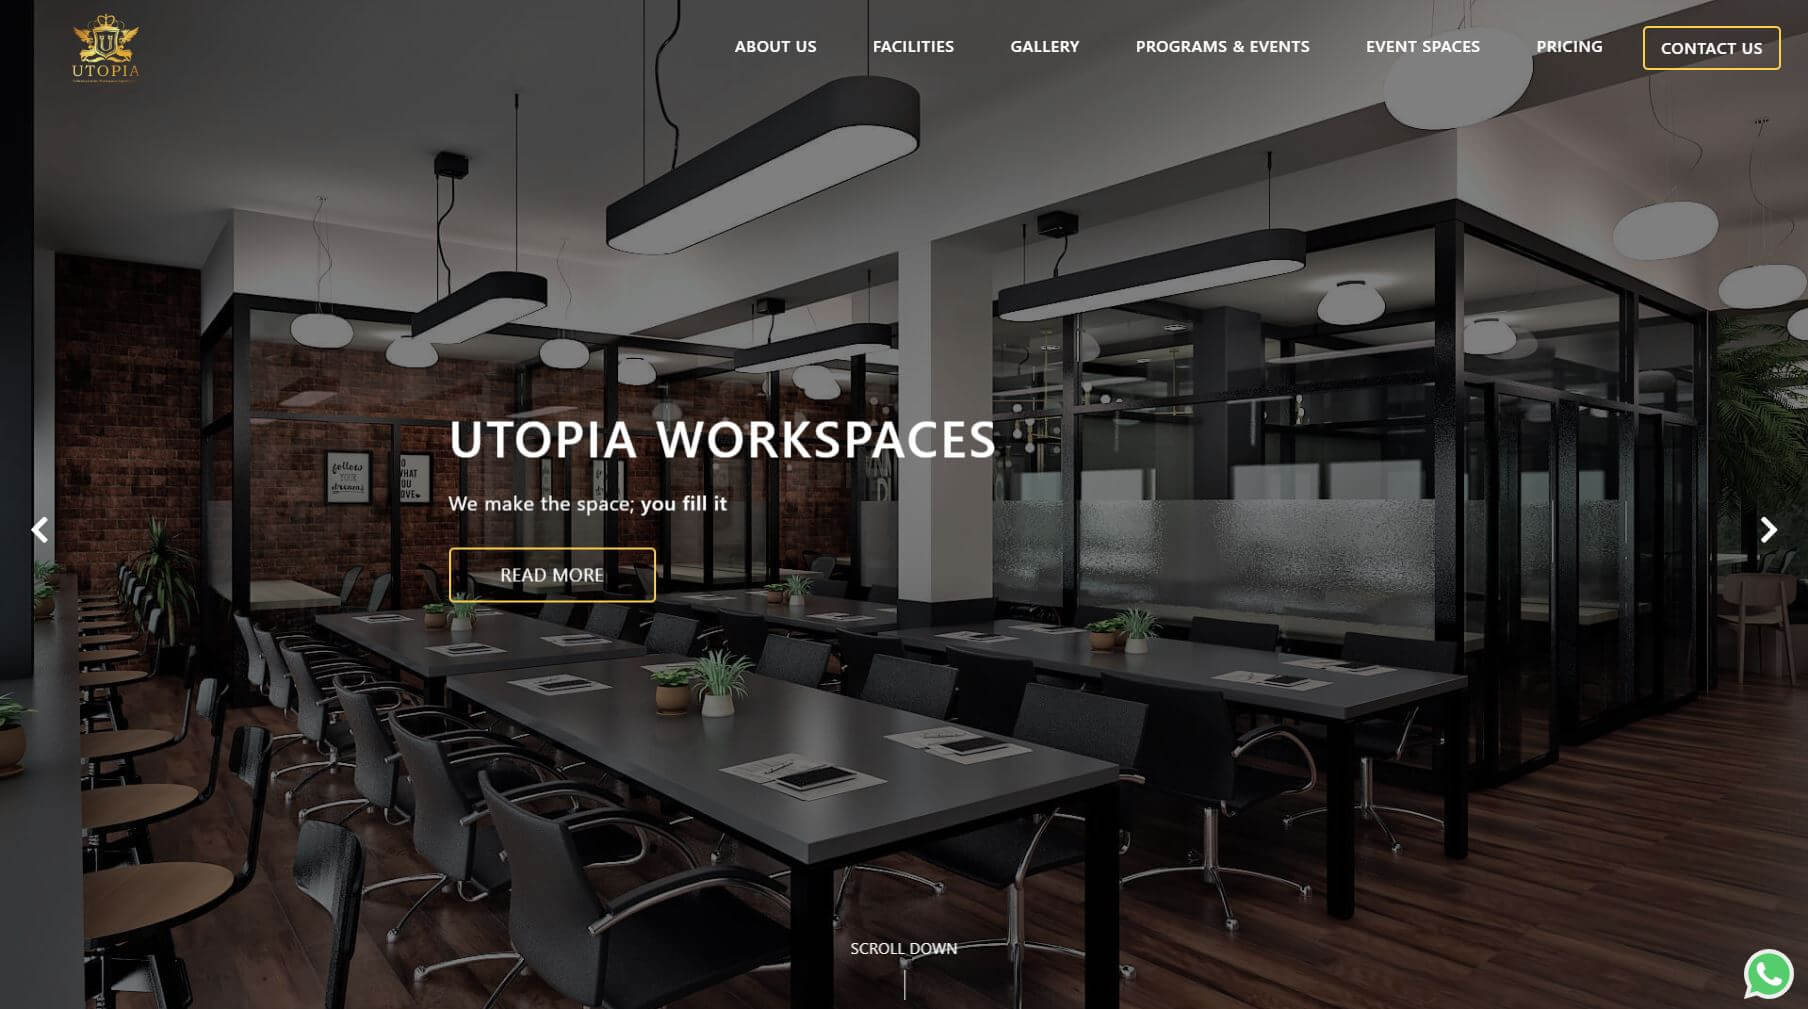 Evoweb - Utopia Workspaces